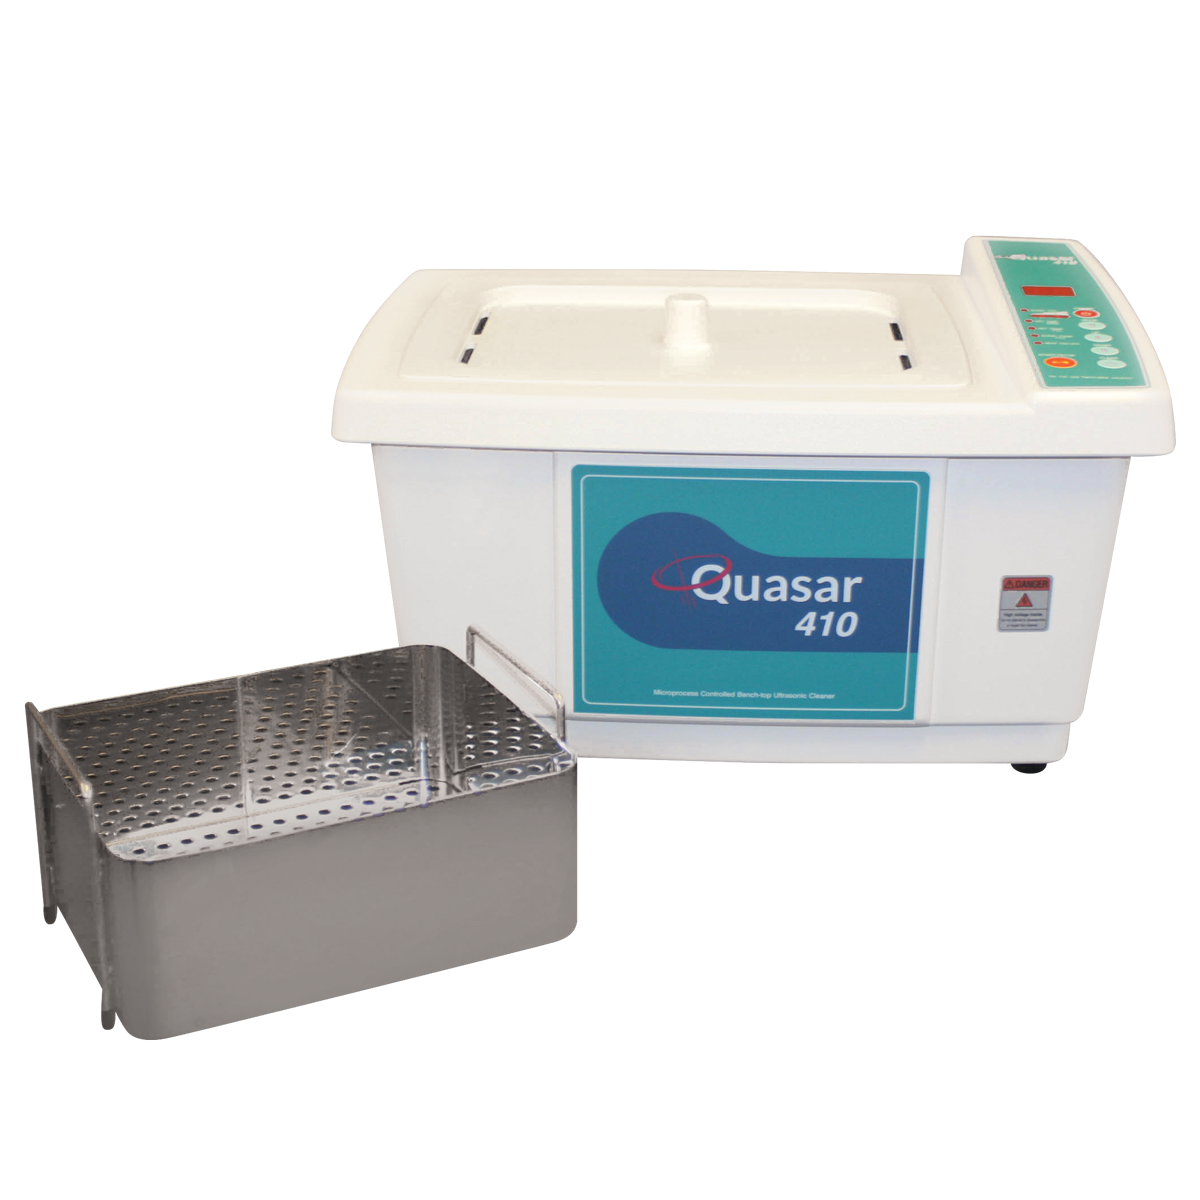 Quasar 410 Ultrasonic Cleaner